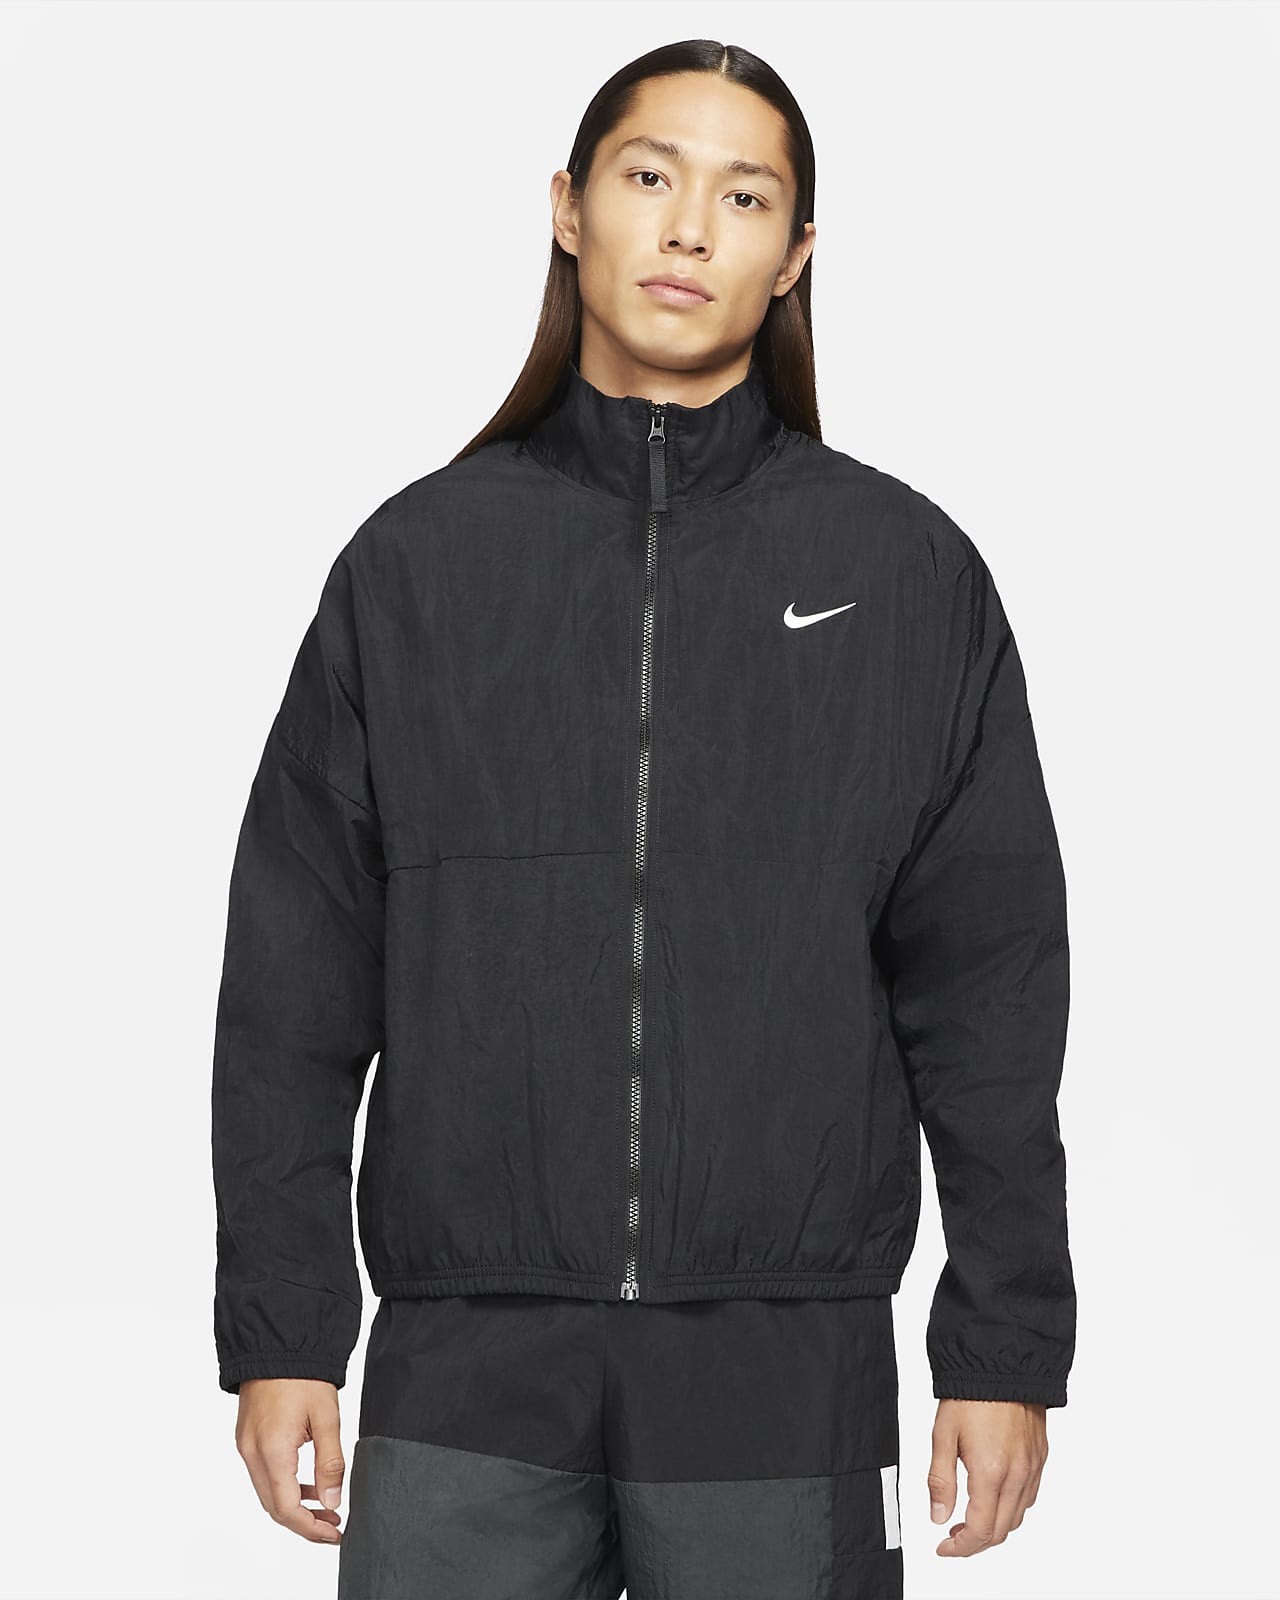 Nike Dri-FIT Men's Basketball Jacket 